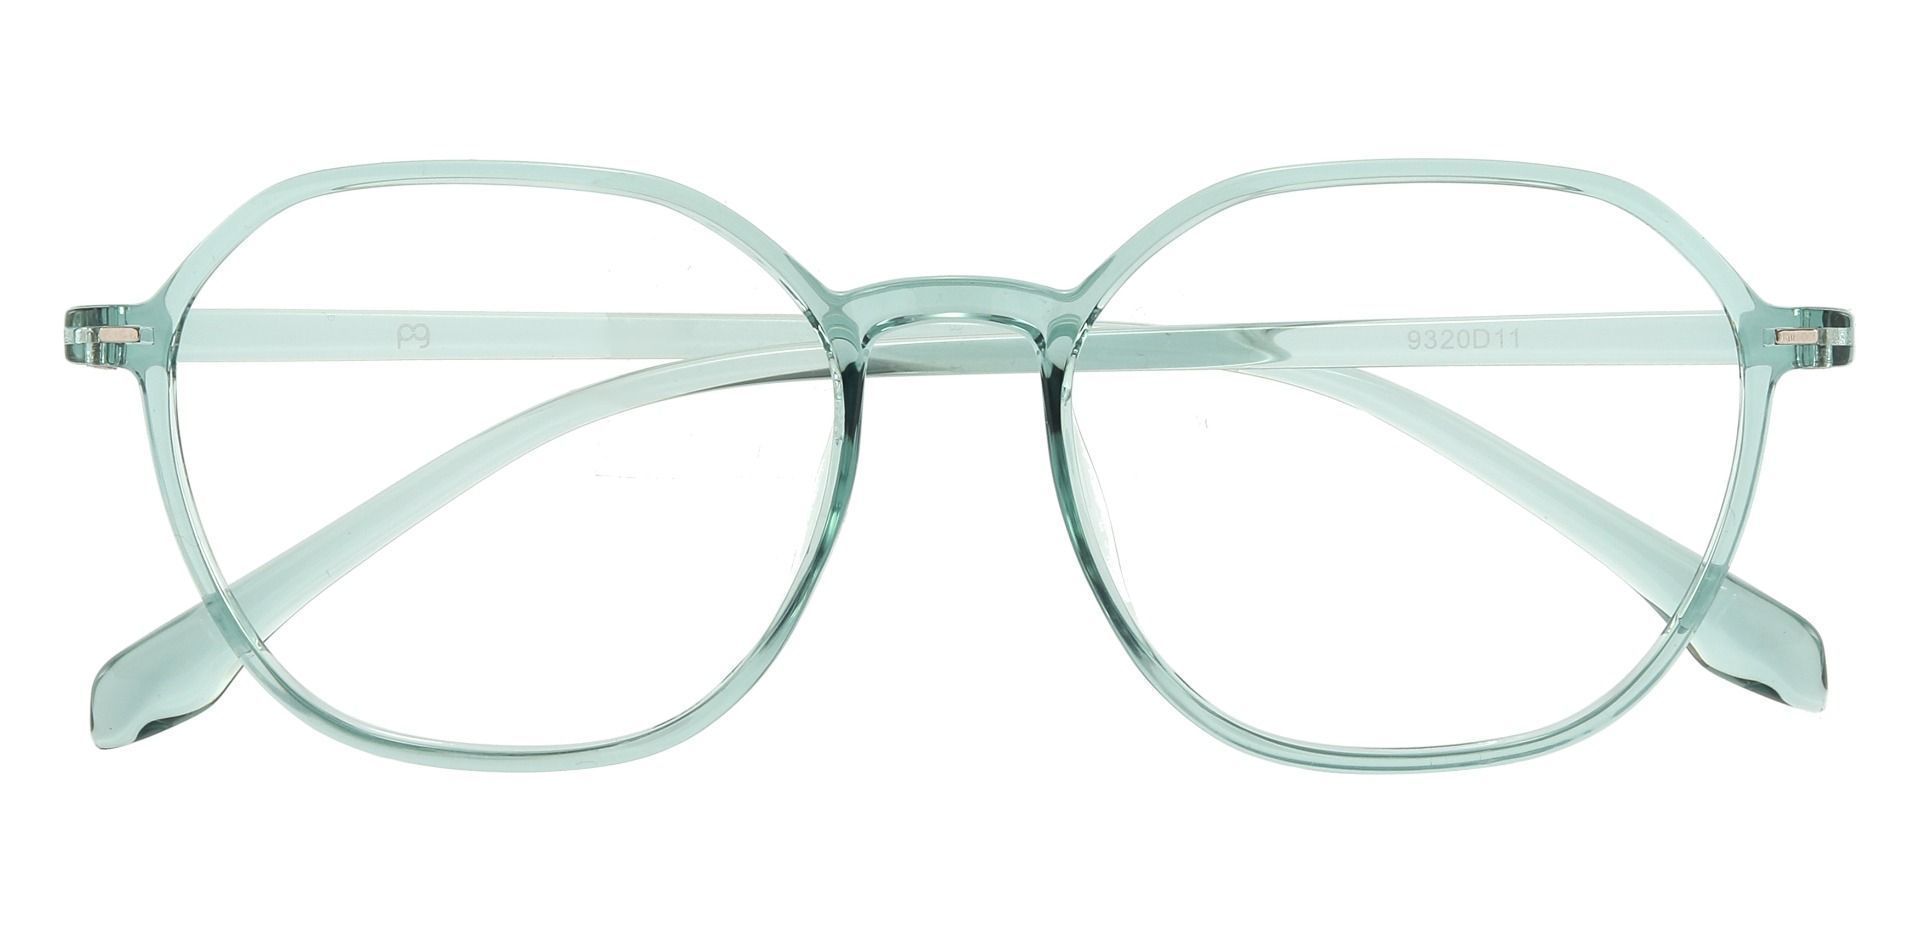 Detroit Geometric Prescription Glasses - Green